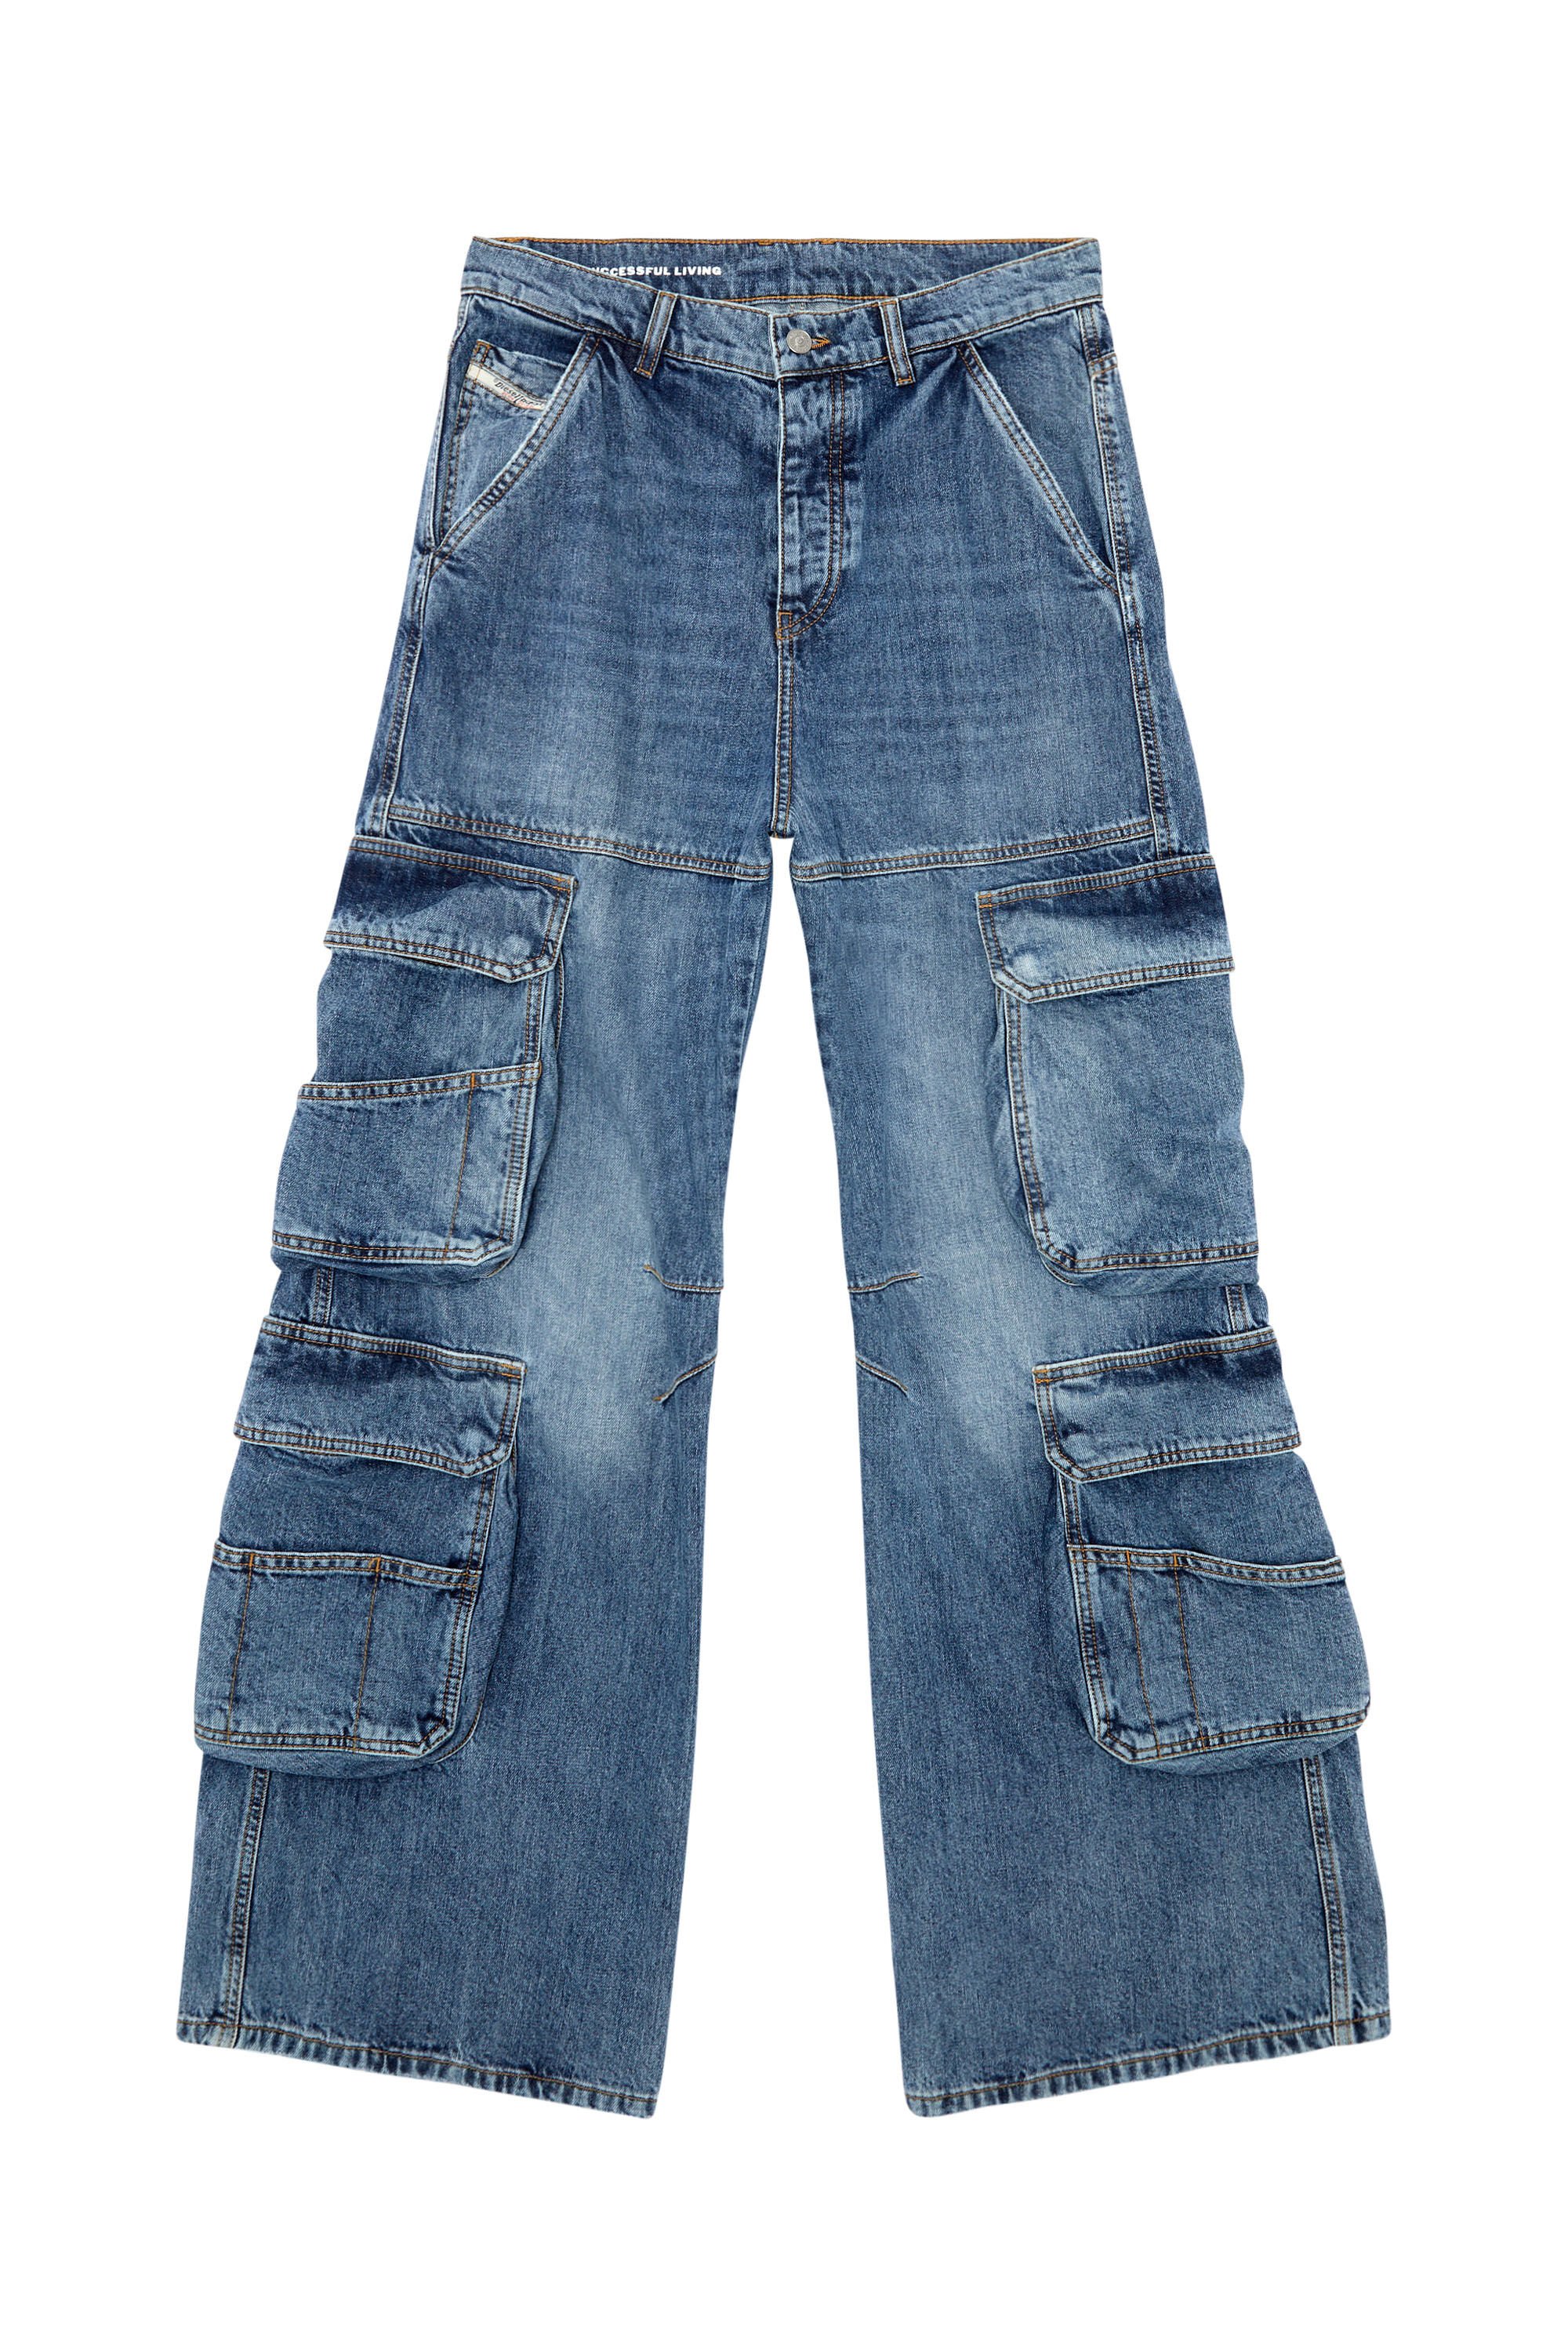 Dolce Gabbana Womens Jeans 👖 Pants Trousers W26/L40 Very Good